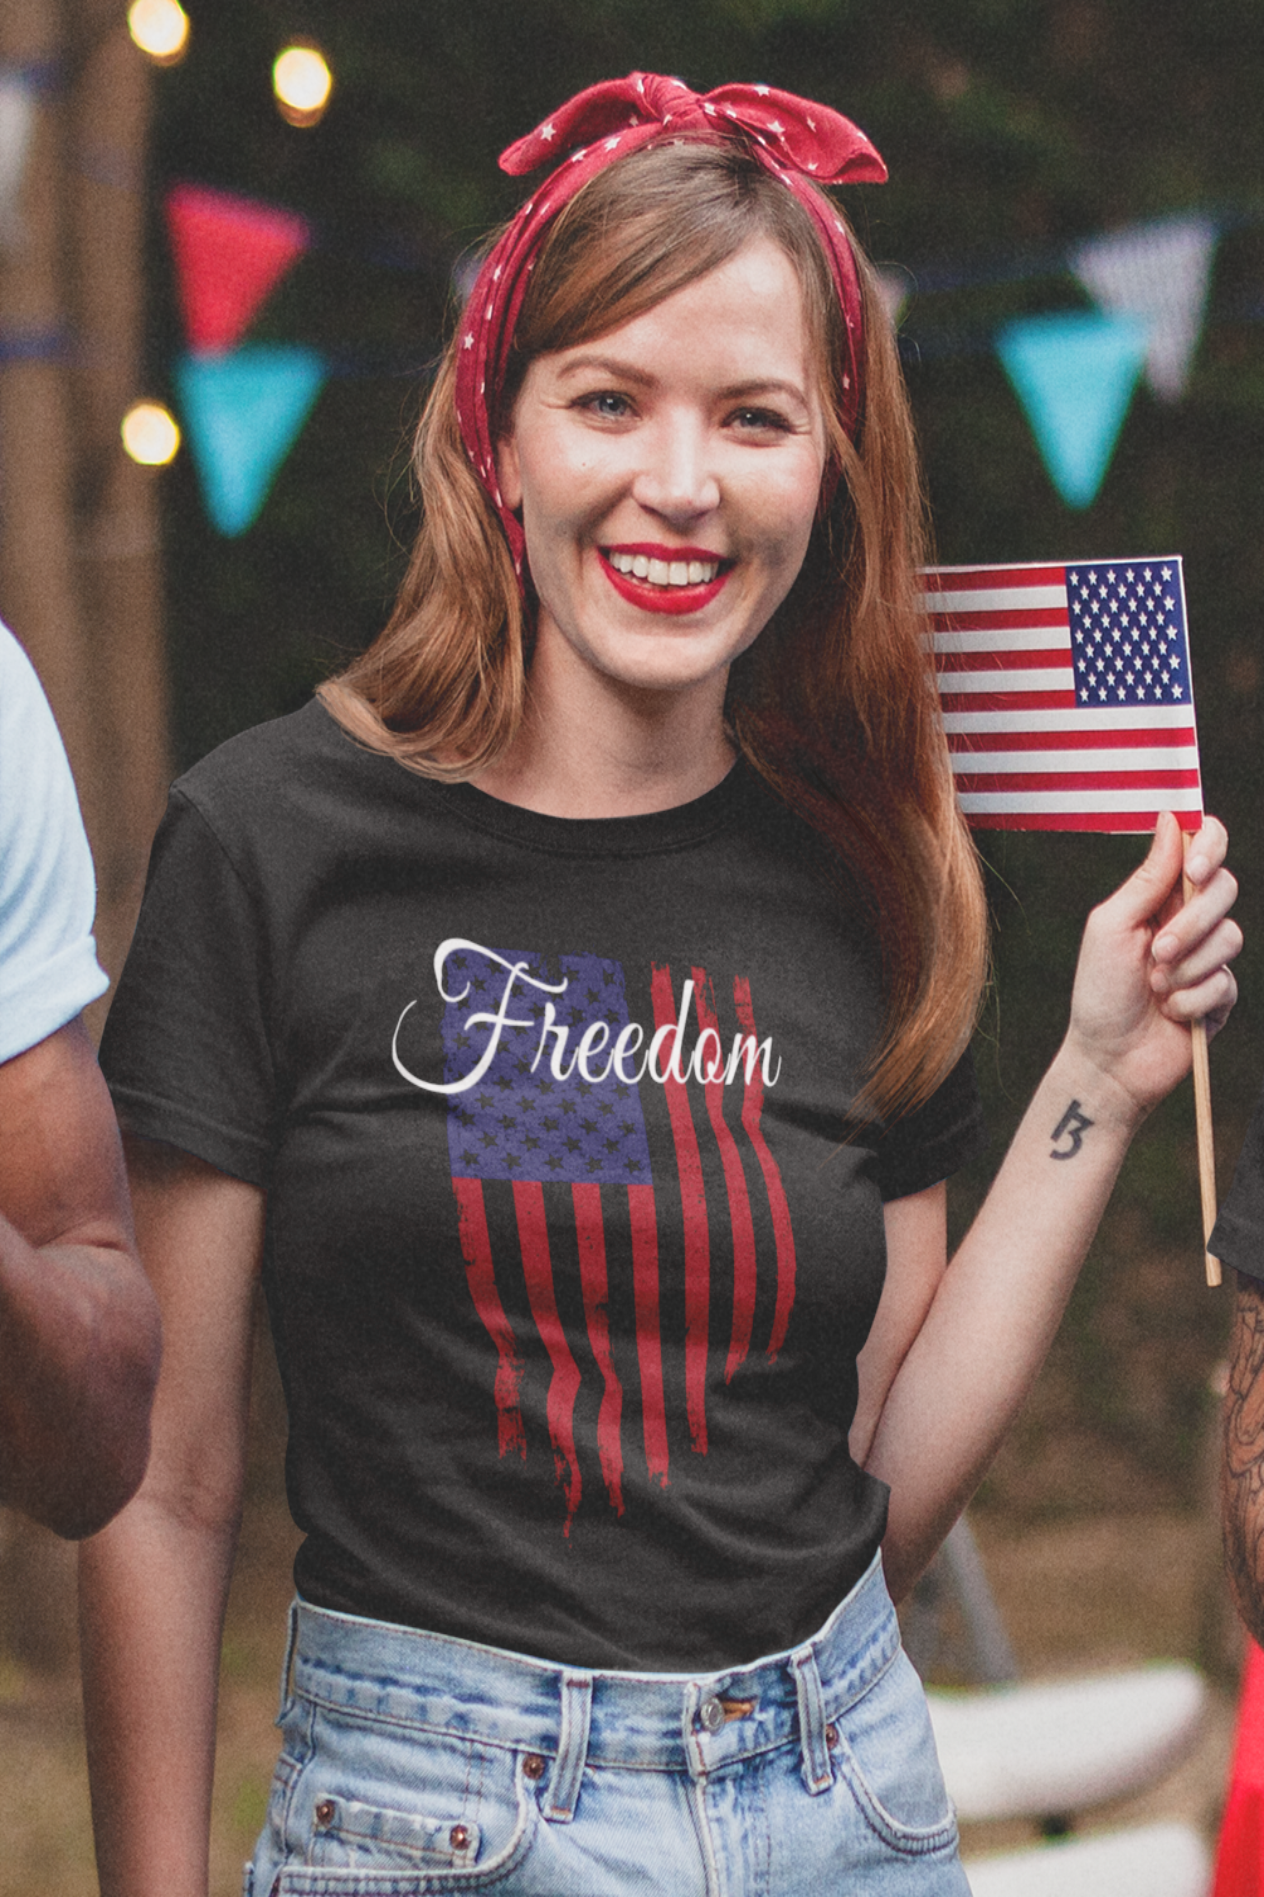 Freedom American Flag Unisex Crew Neck T-Shirt